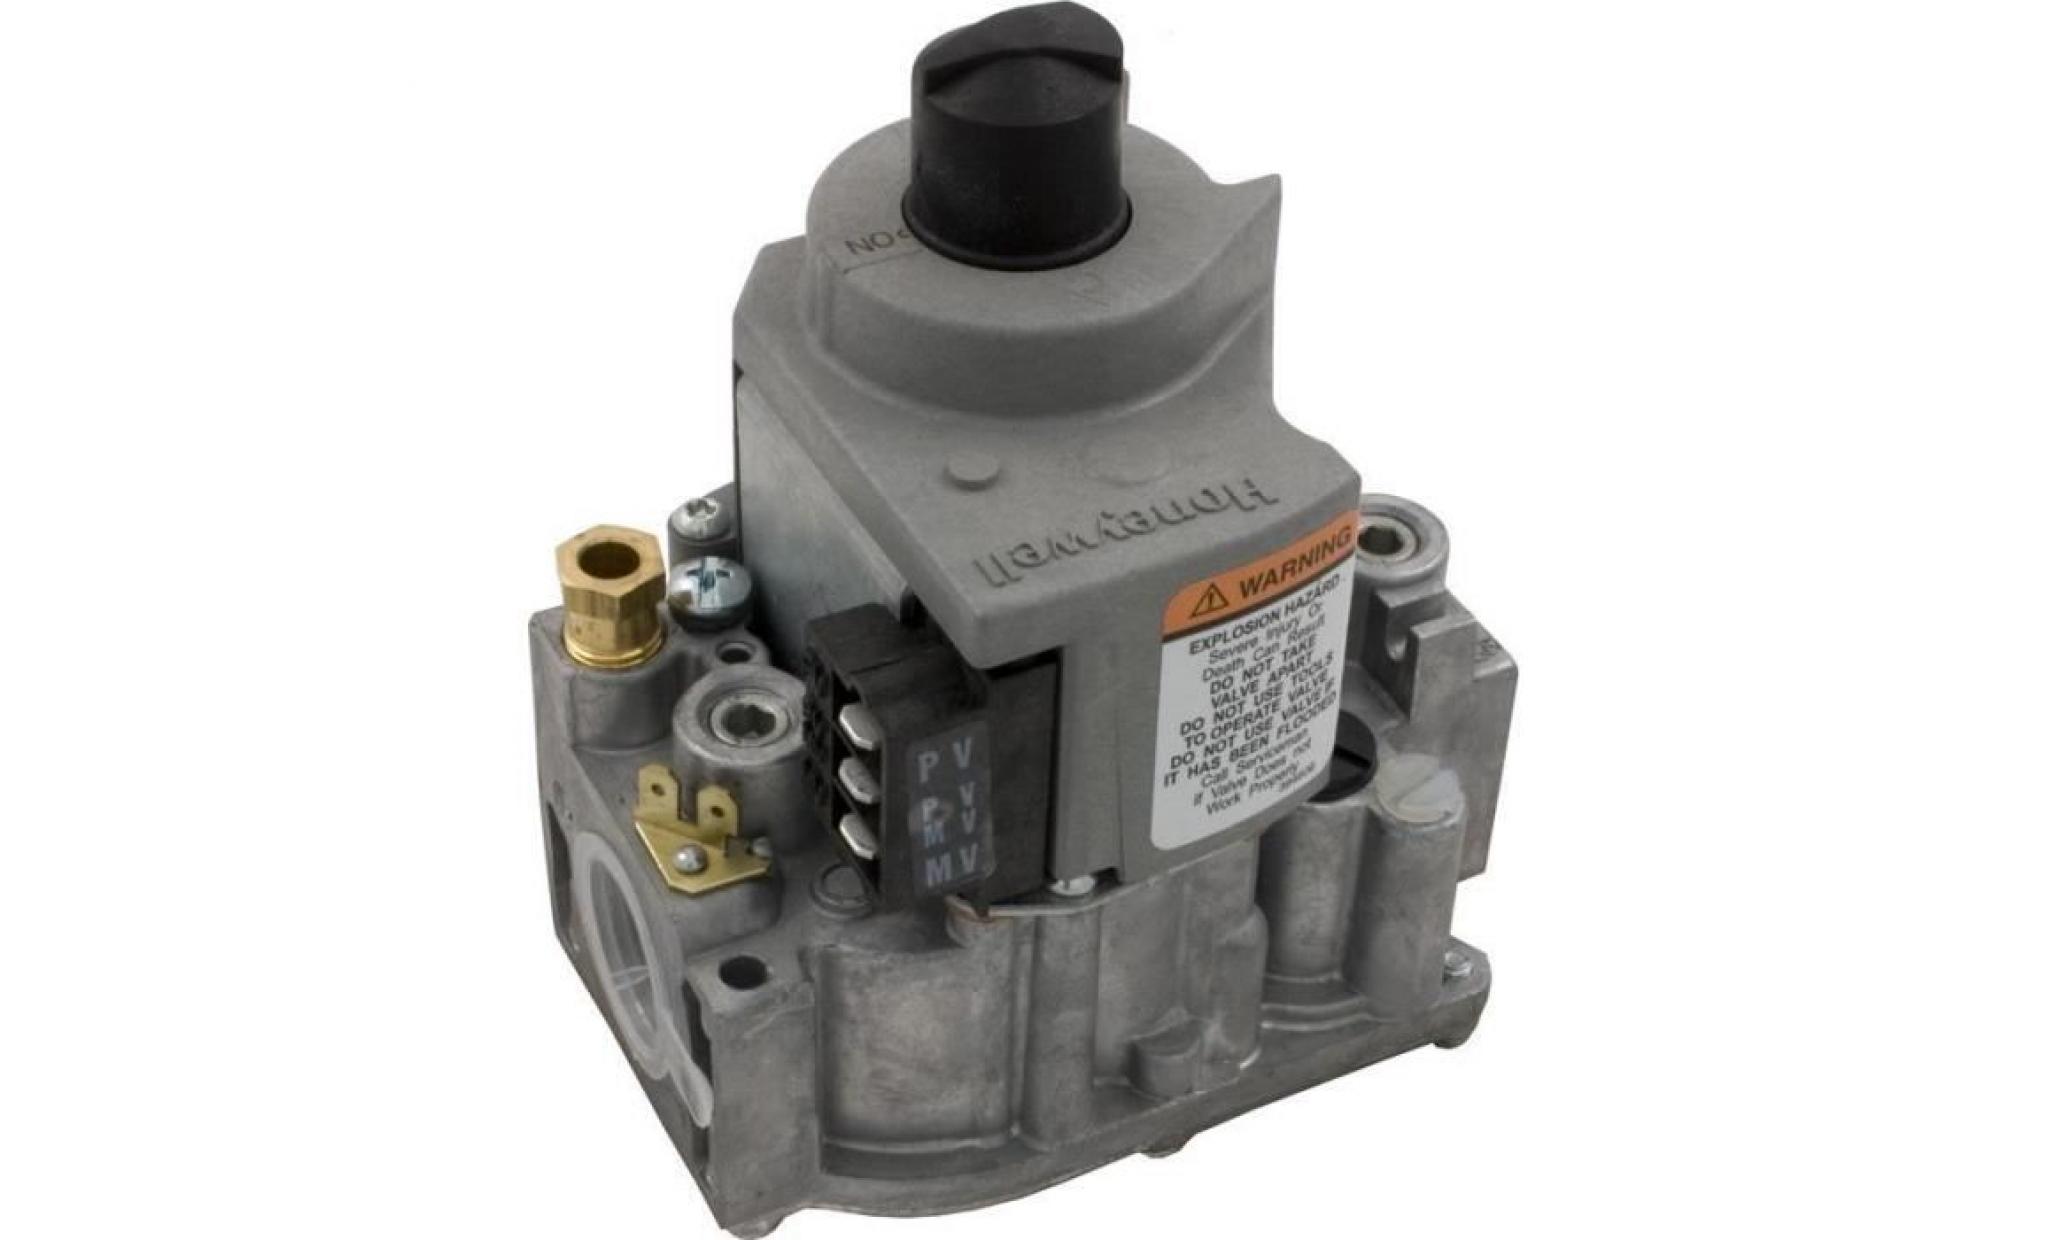 pentair 073999 iid gaz propane remplacement valvulaire minimax et chauffage powermax